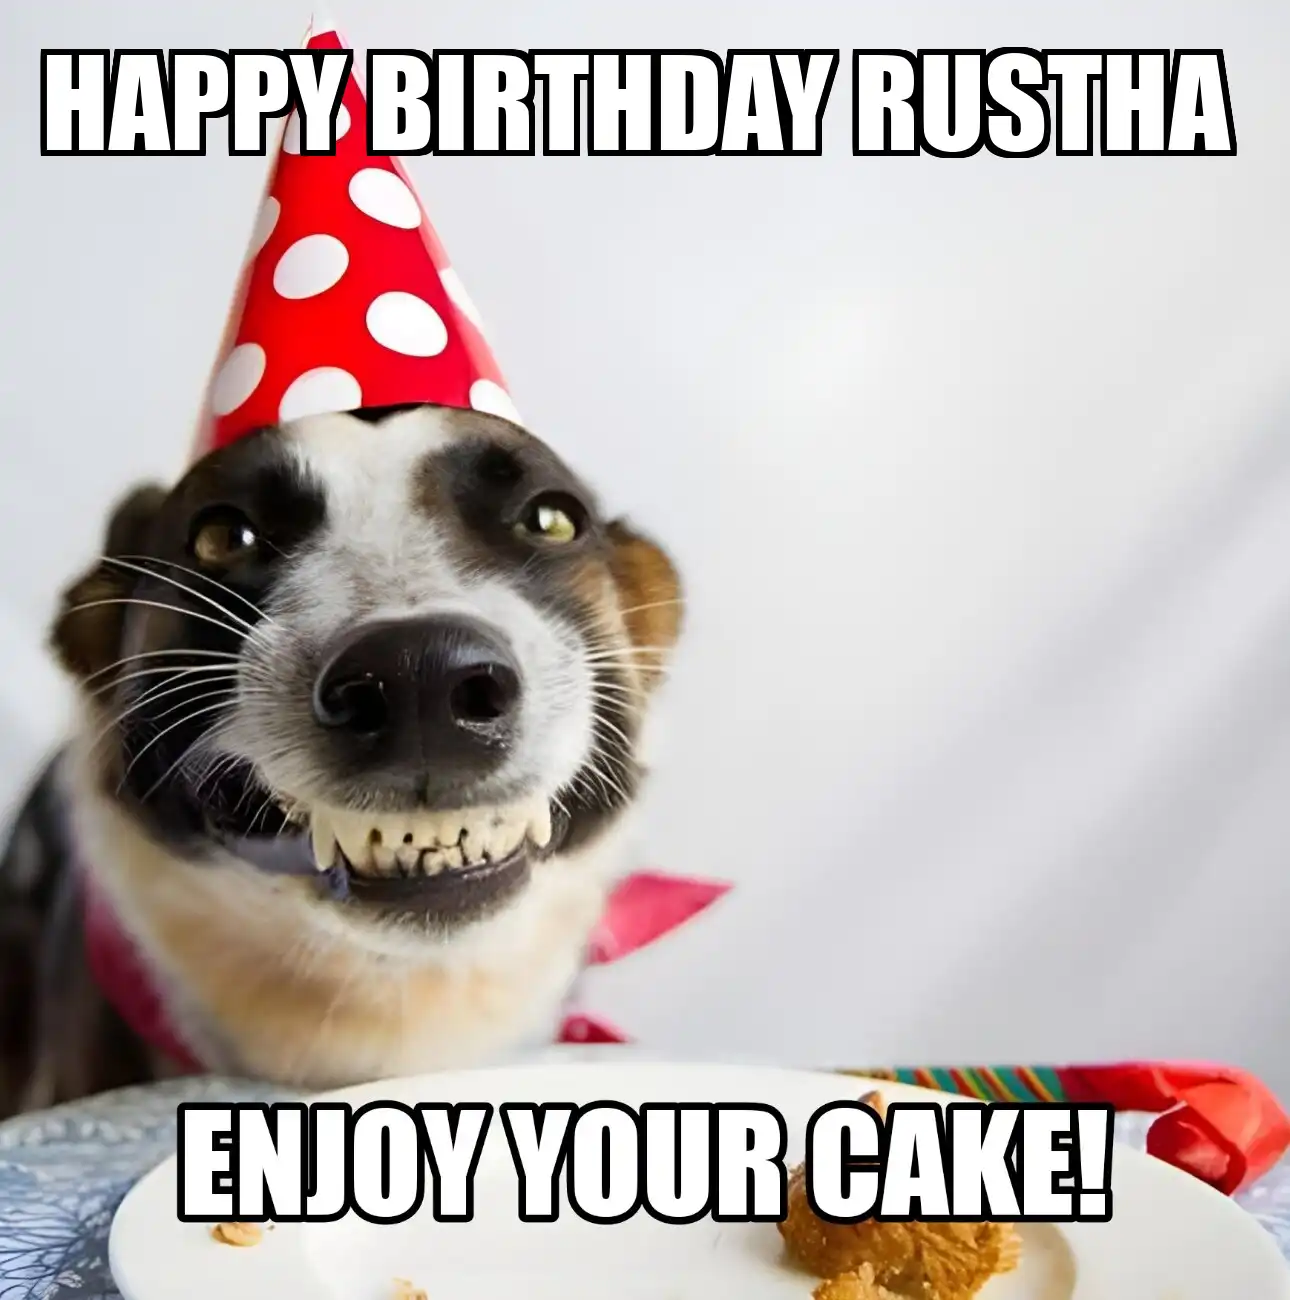 Happy Birthday Rustha Enjoy Your Cake Dog Meme